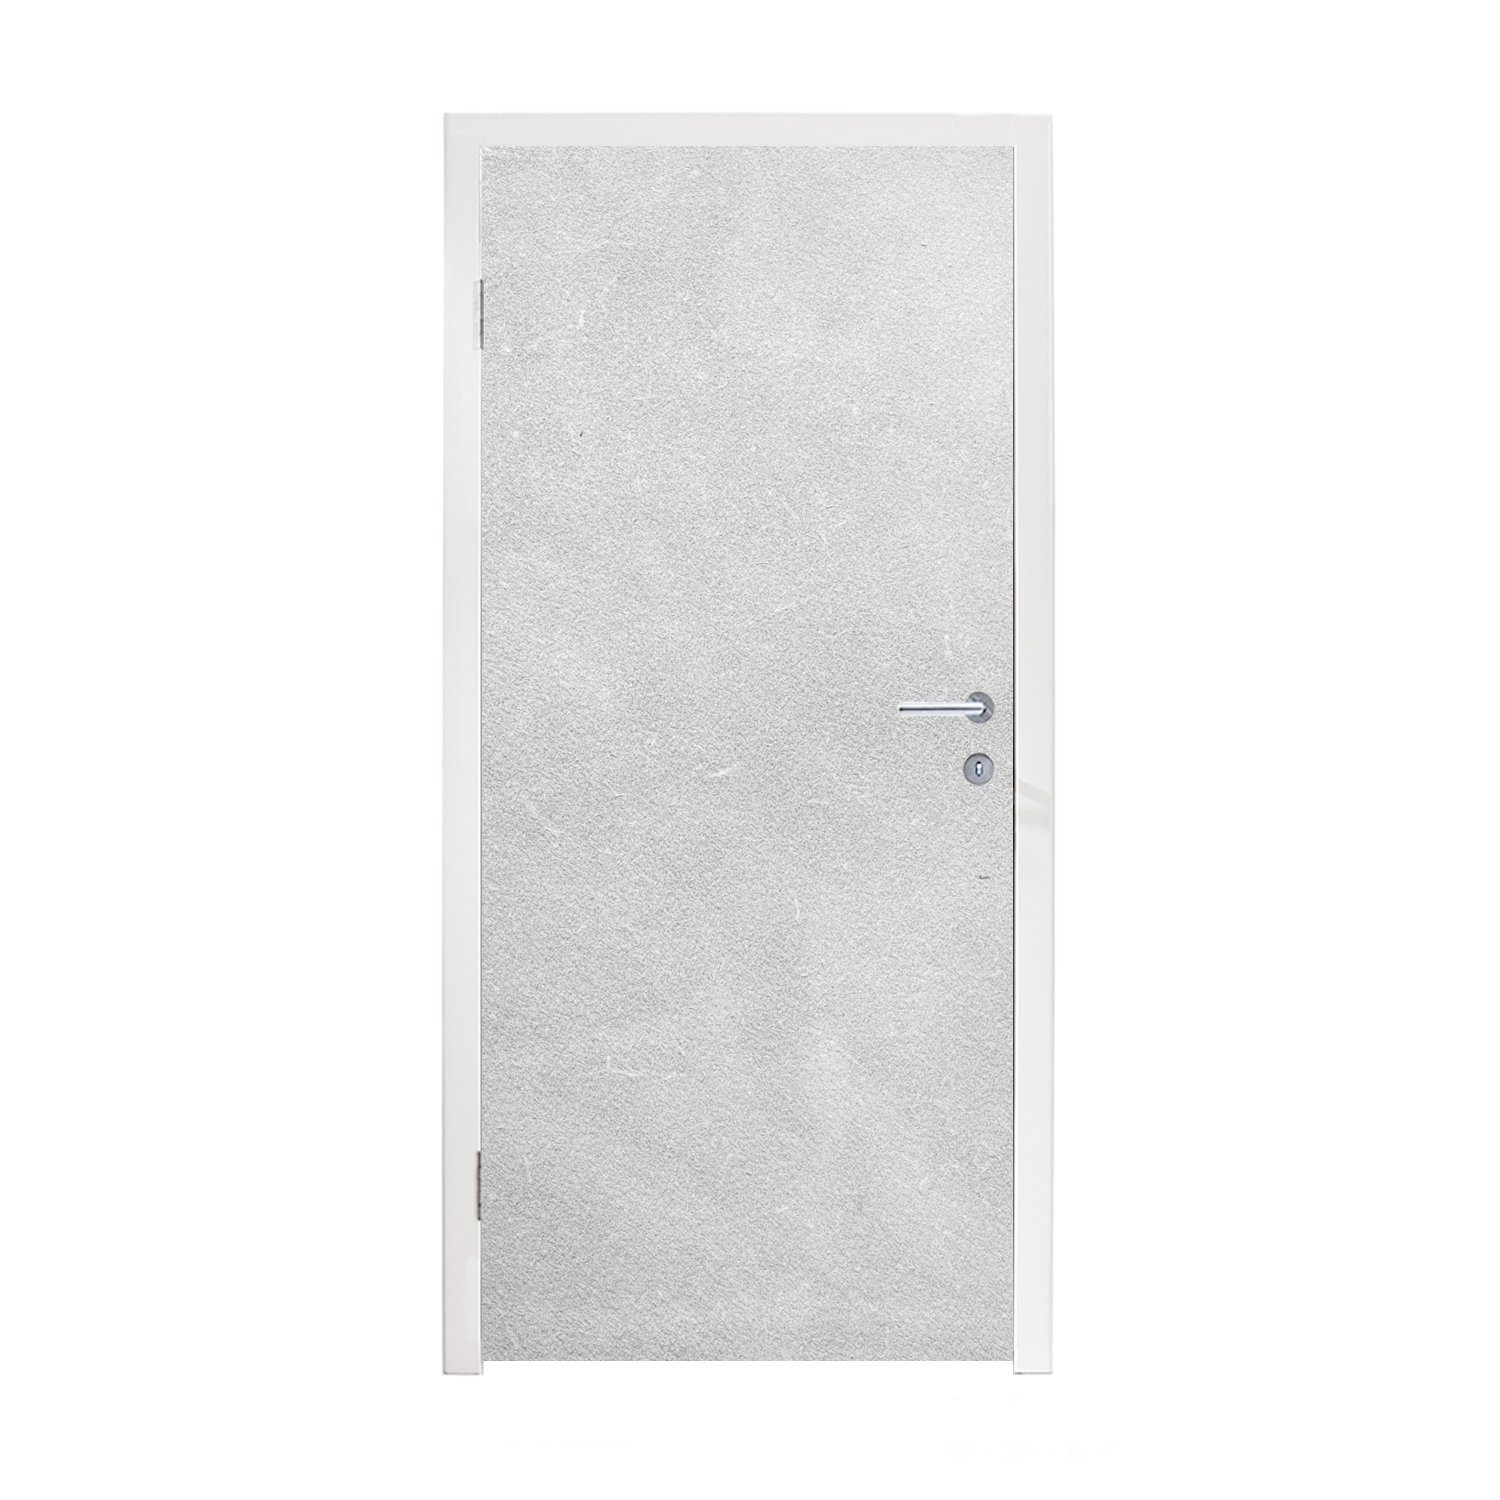 MuchoWow Türtapete Leder - Strukturiert - Lederoptik - Grau, Matt, bedruckt, (1 St), Fototapete für Tür, Türaufkleber, 75x205 cm